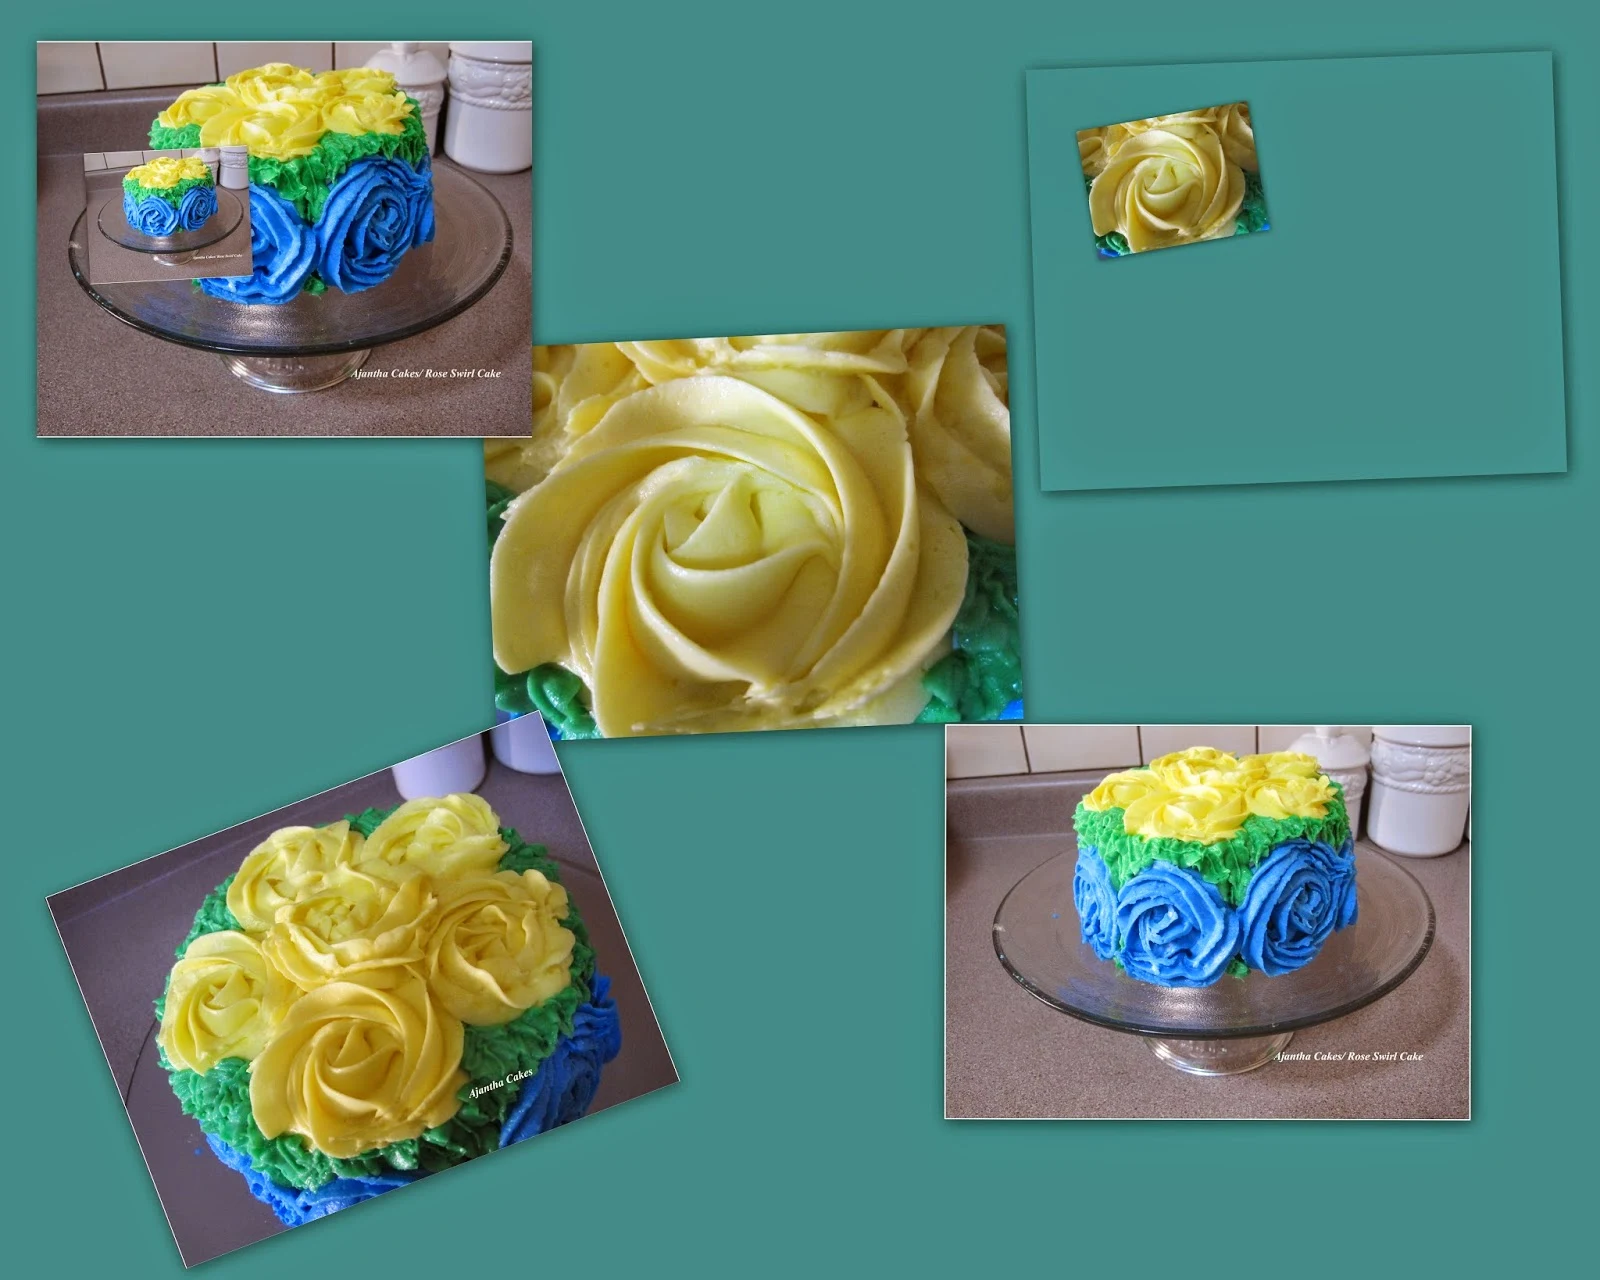 Ajantha Cakes/Rose Swirl Cake